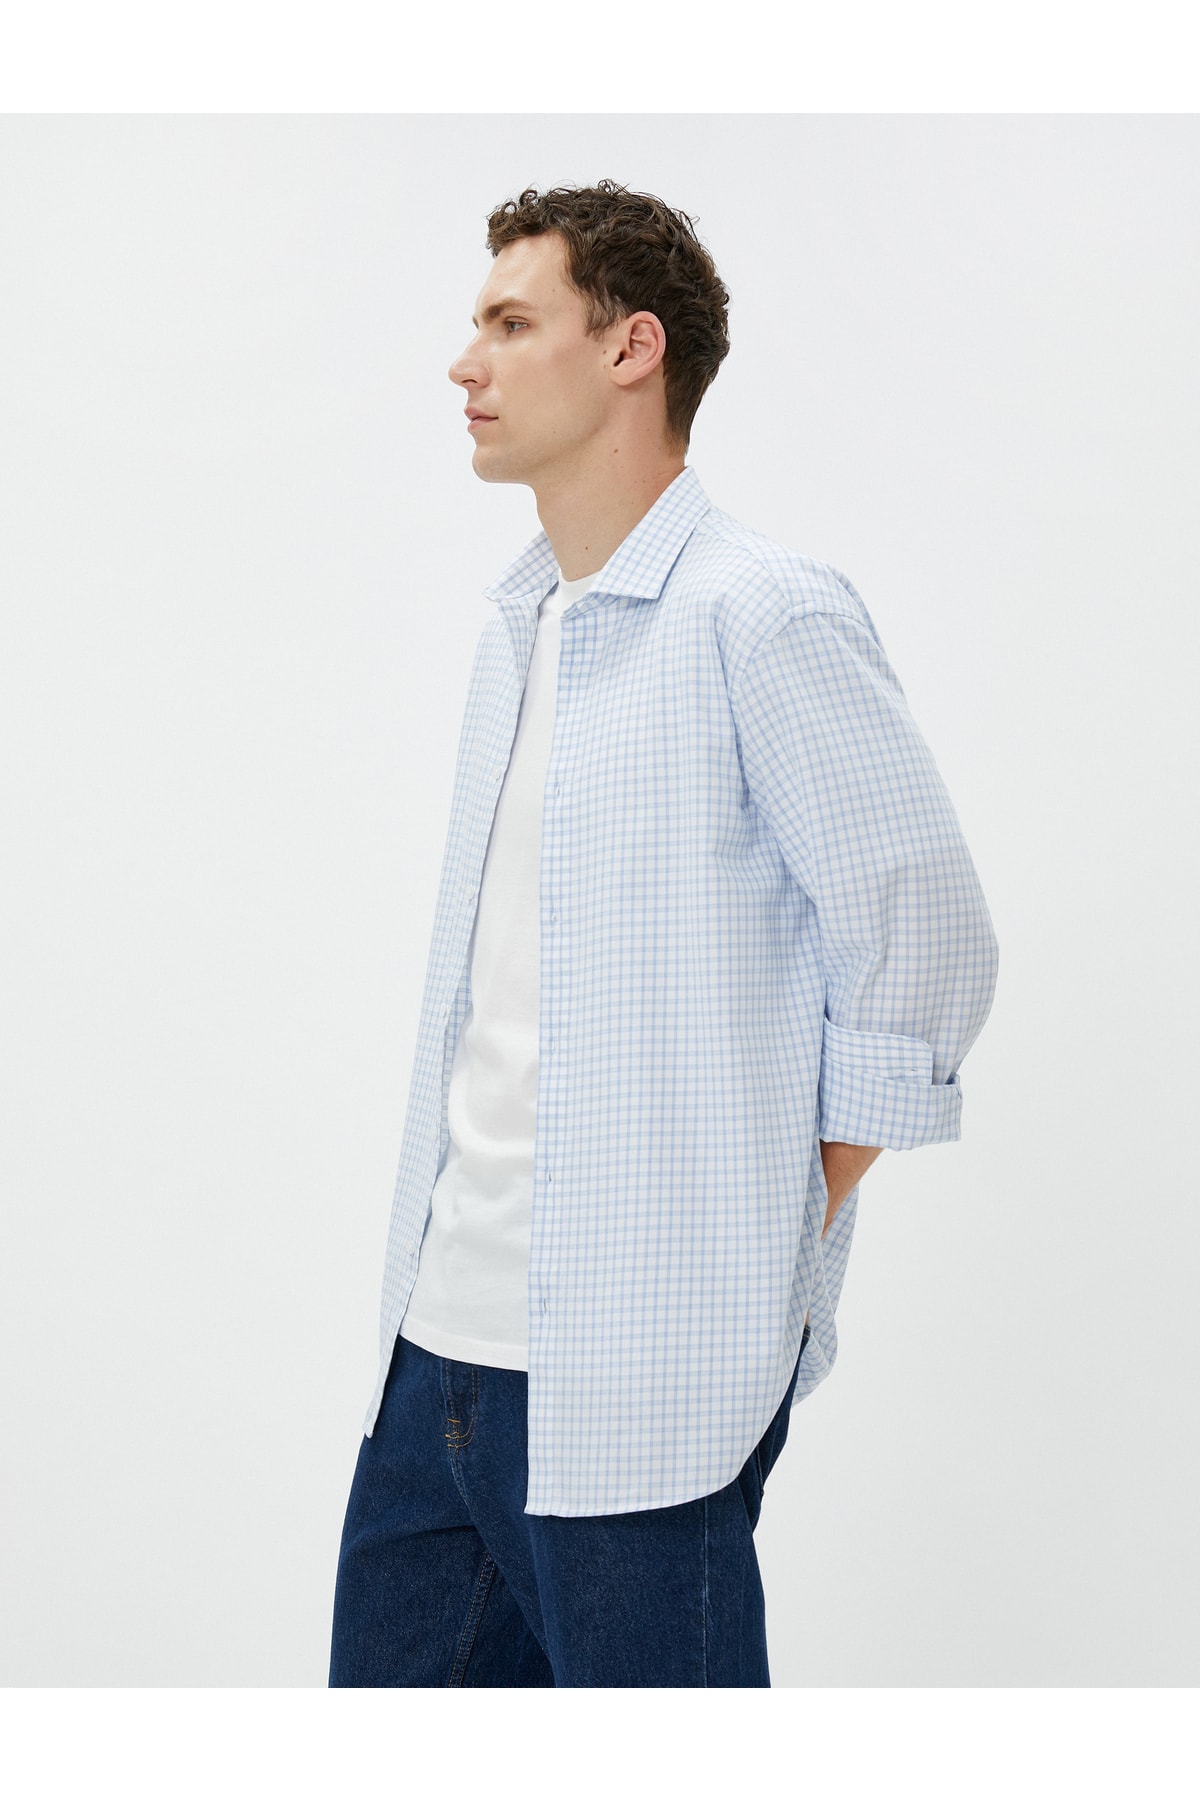 Koton Checkered Shirt Slim Fit Classic Collar Long Sleeve Cotton Non Iron